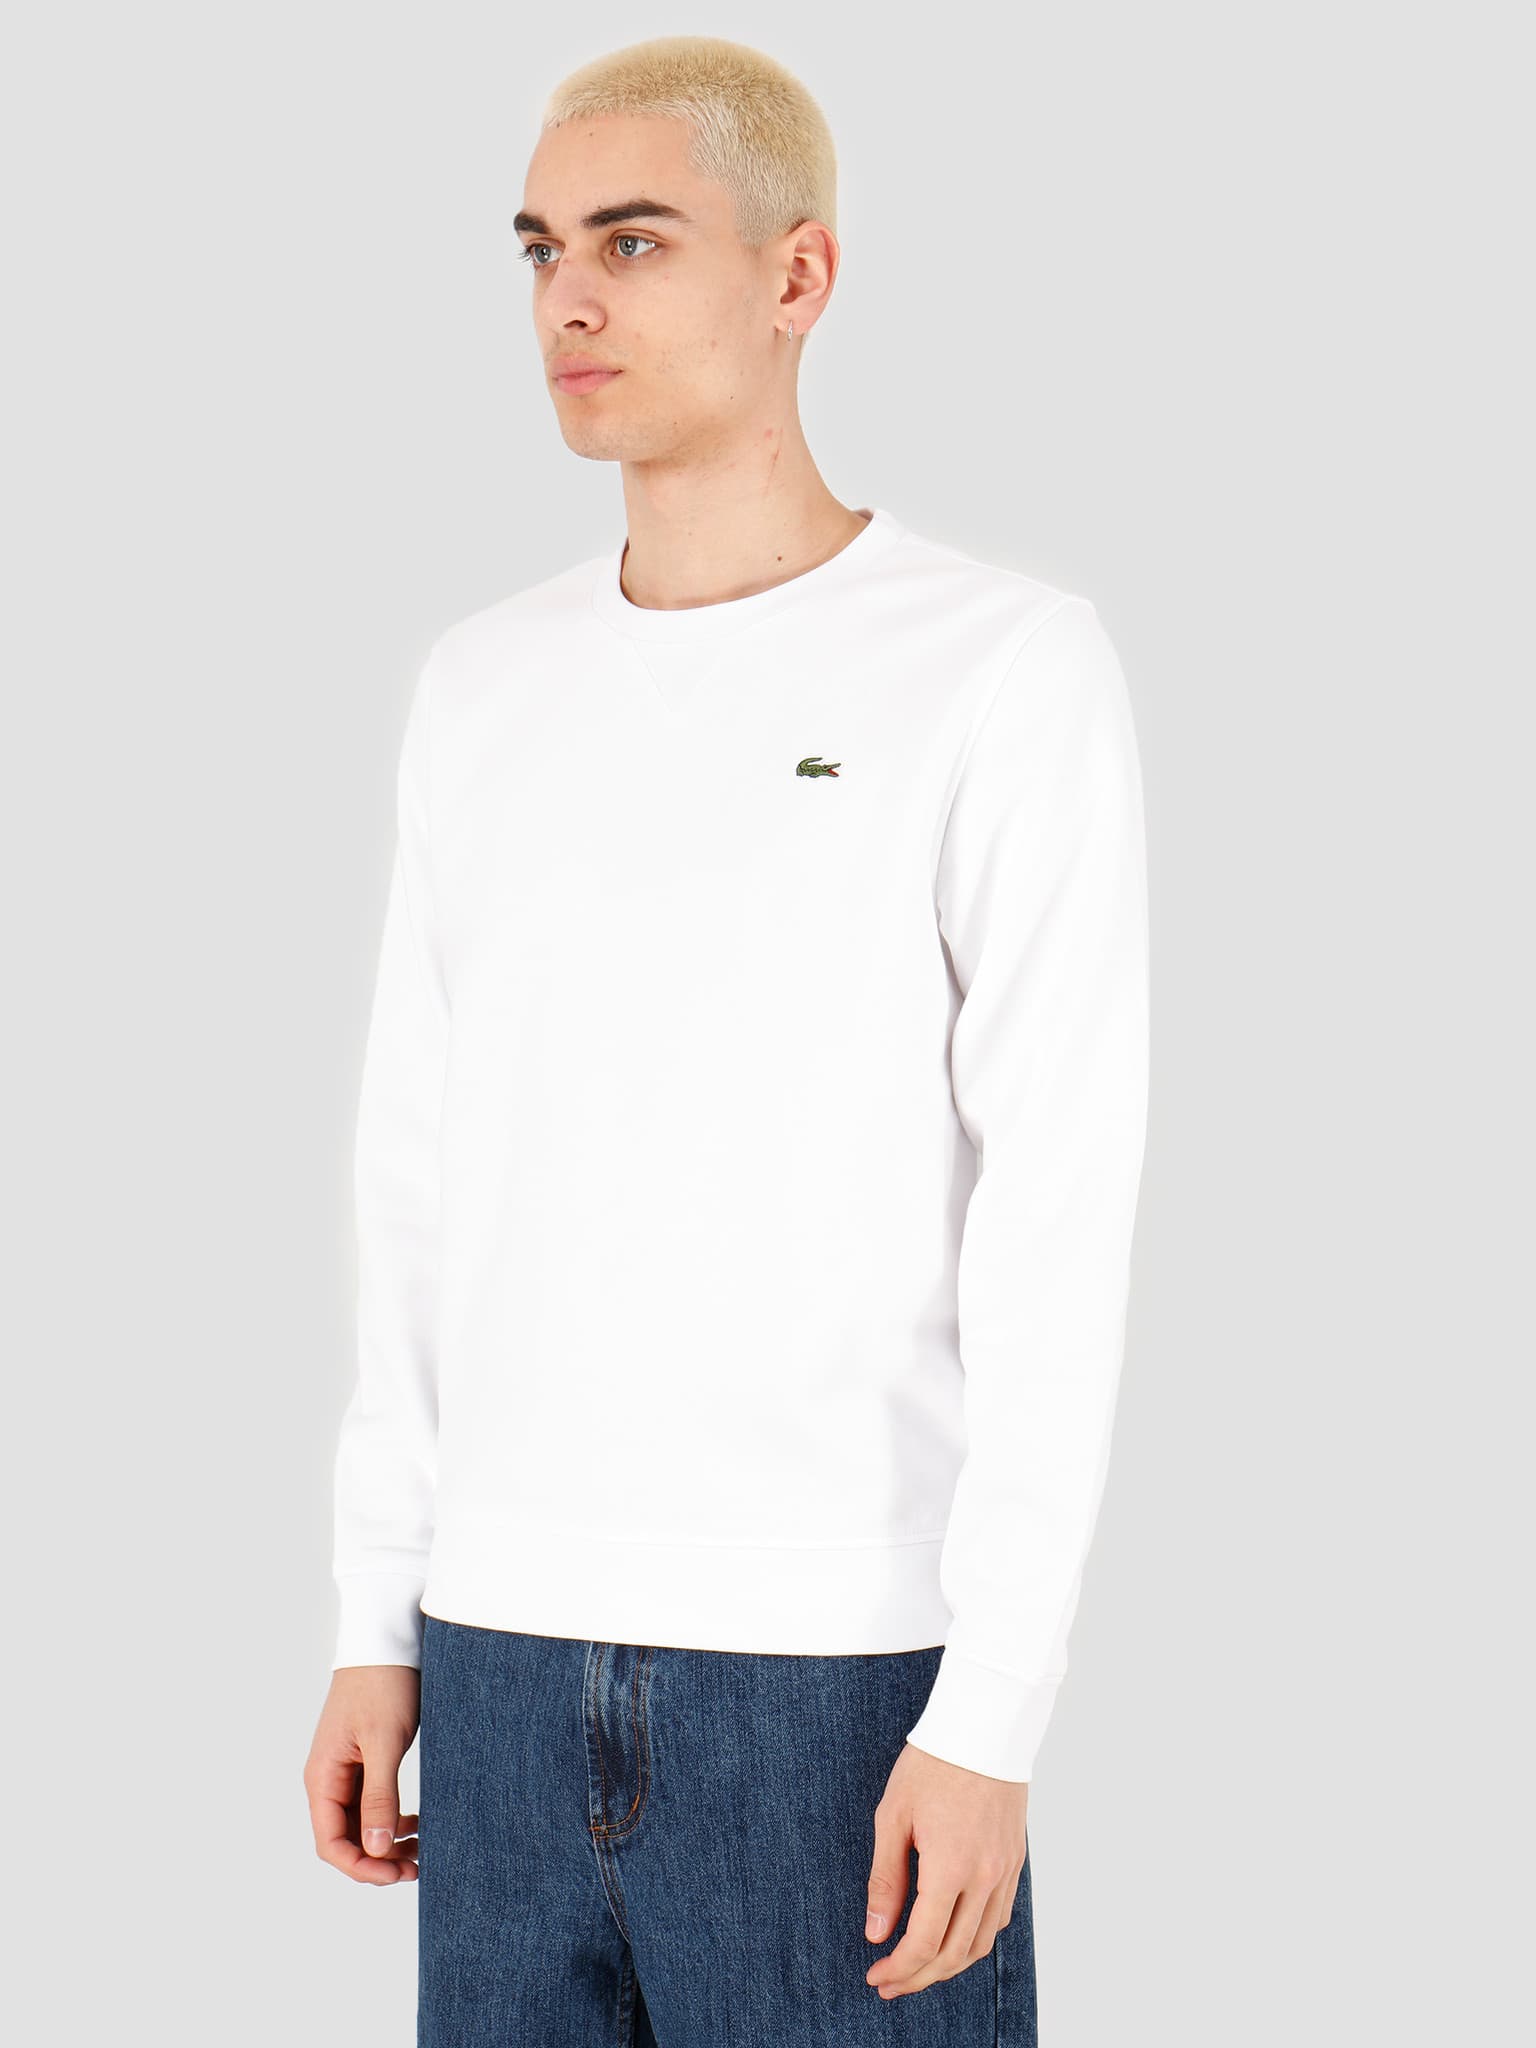 1HS1 Men's sweatshirt 01 White SH7613-01